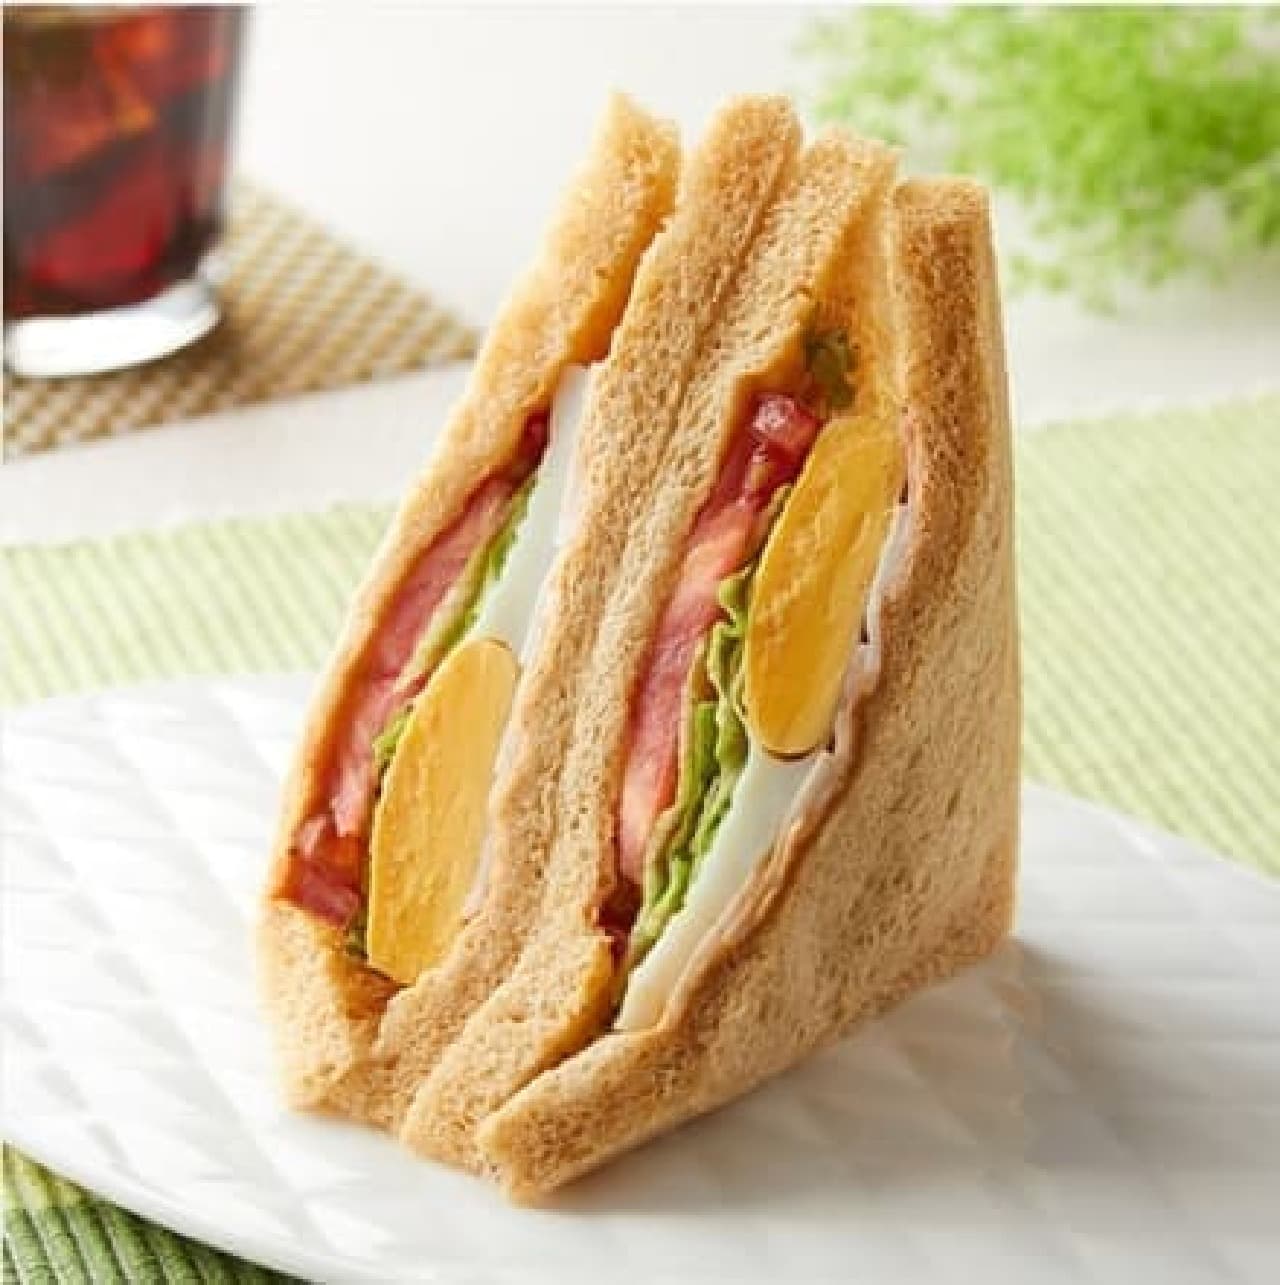 FamilyMart "Whole grain sandwich bacon lettuce tomato"